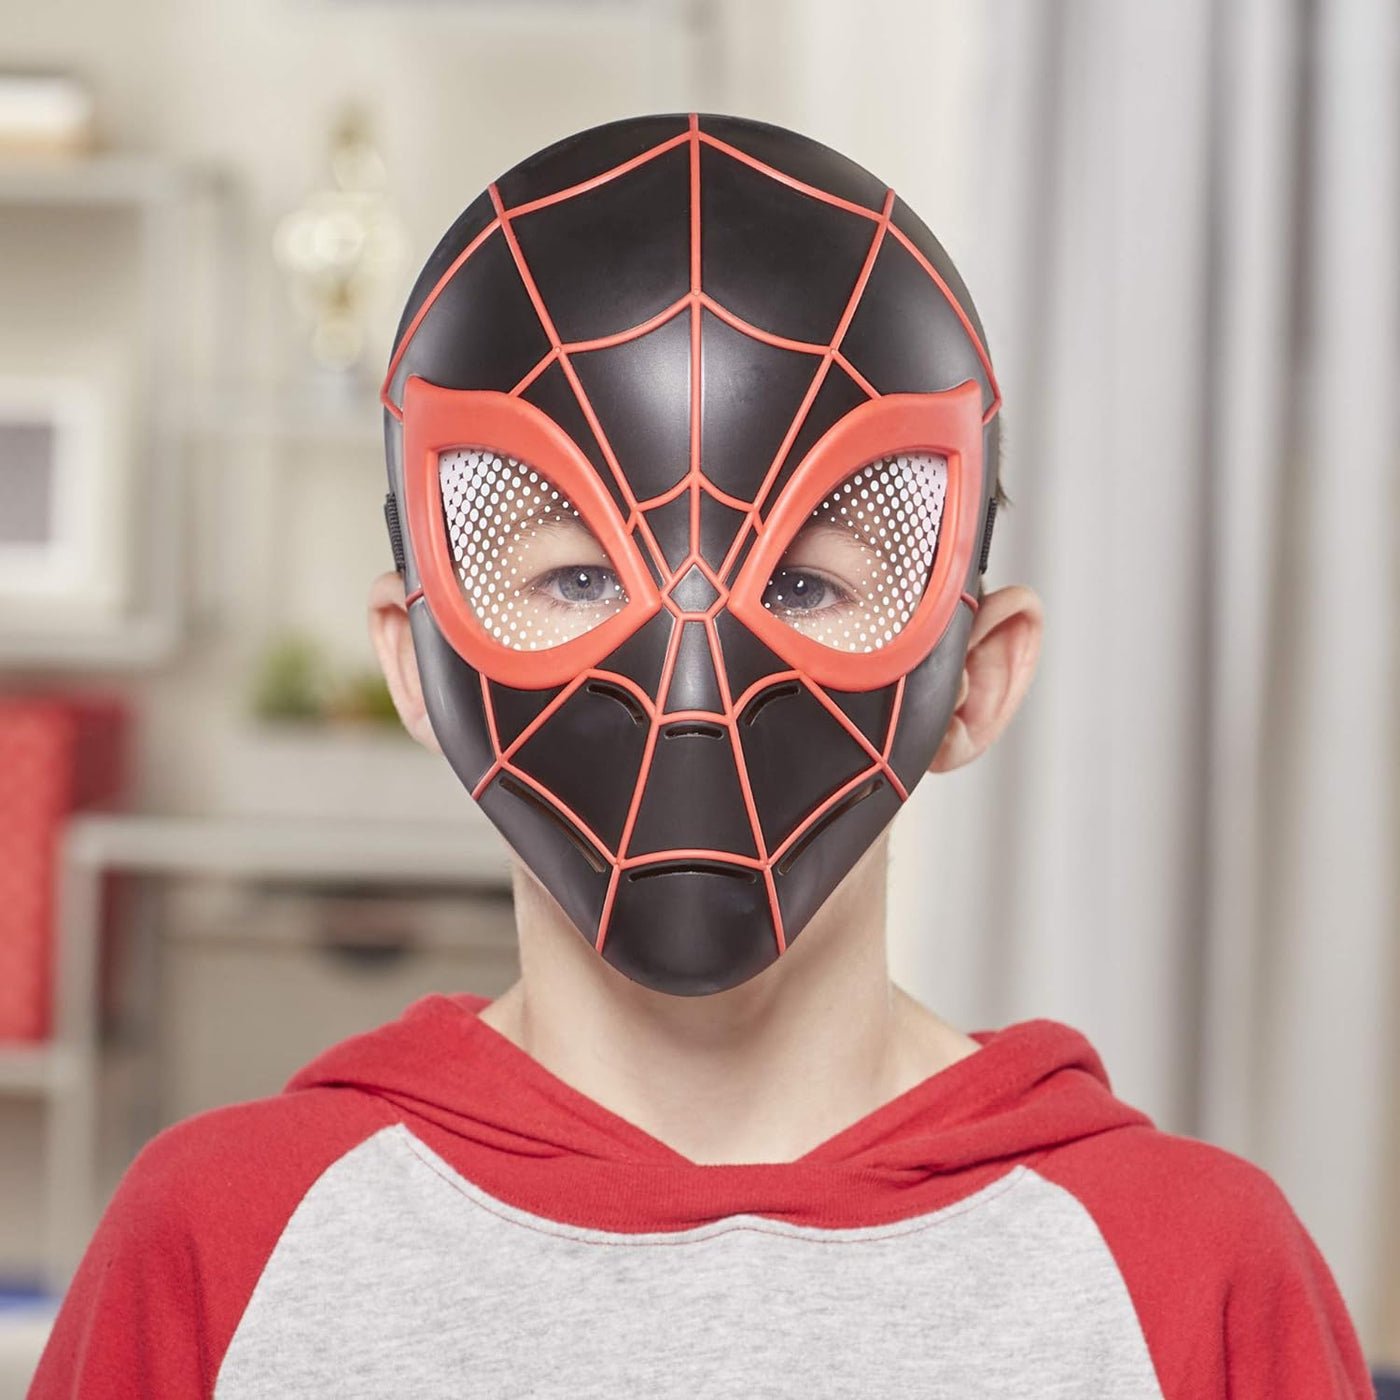 Marvel Spider-Man Miles Morales Mask | Hasbro